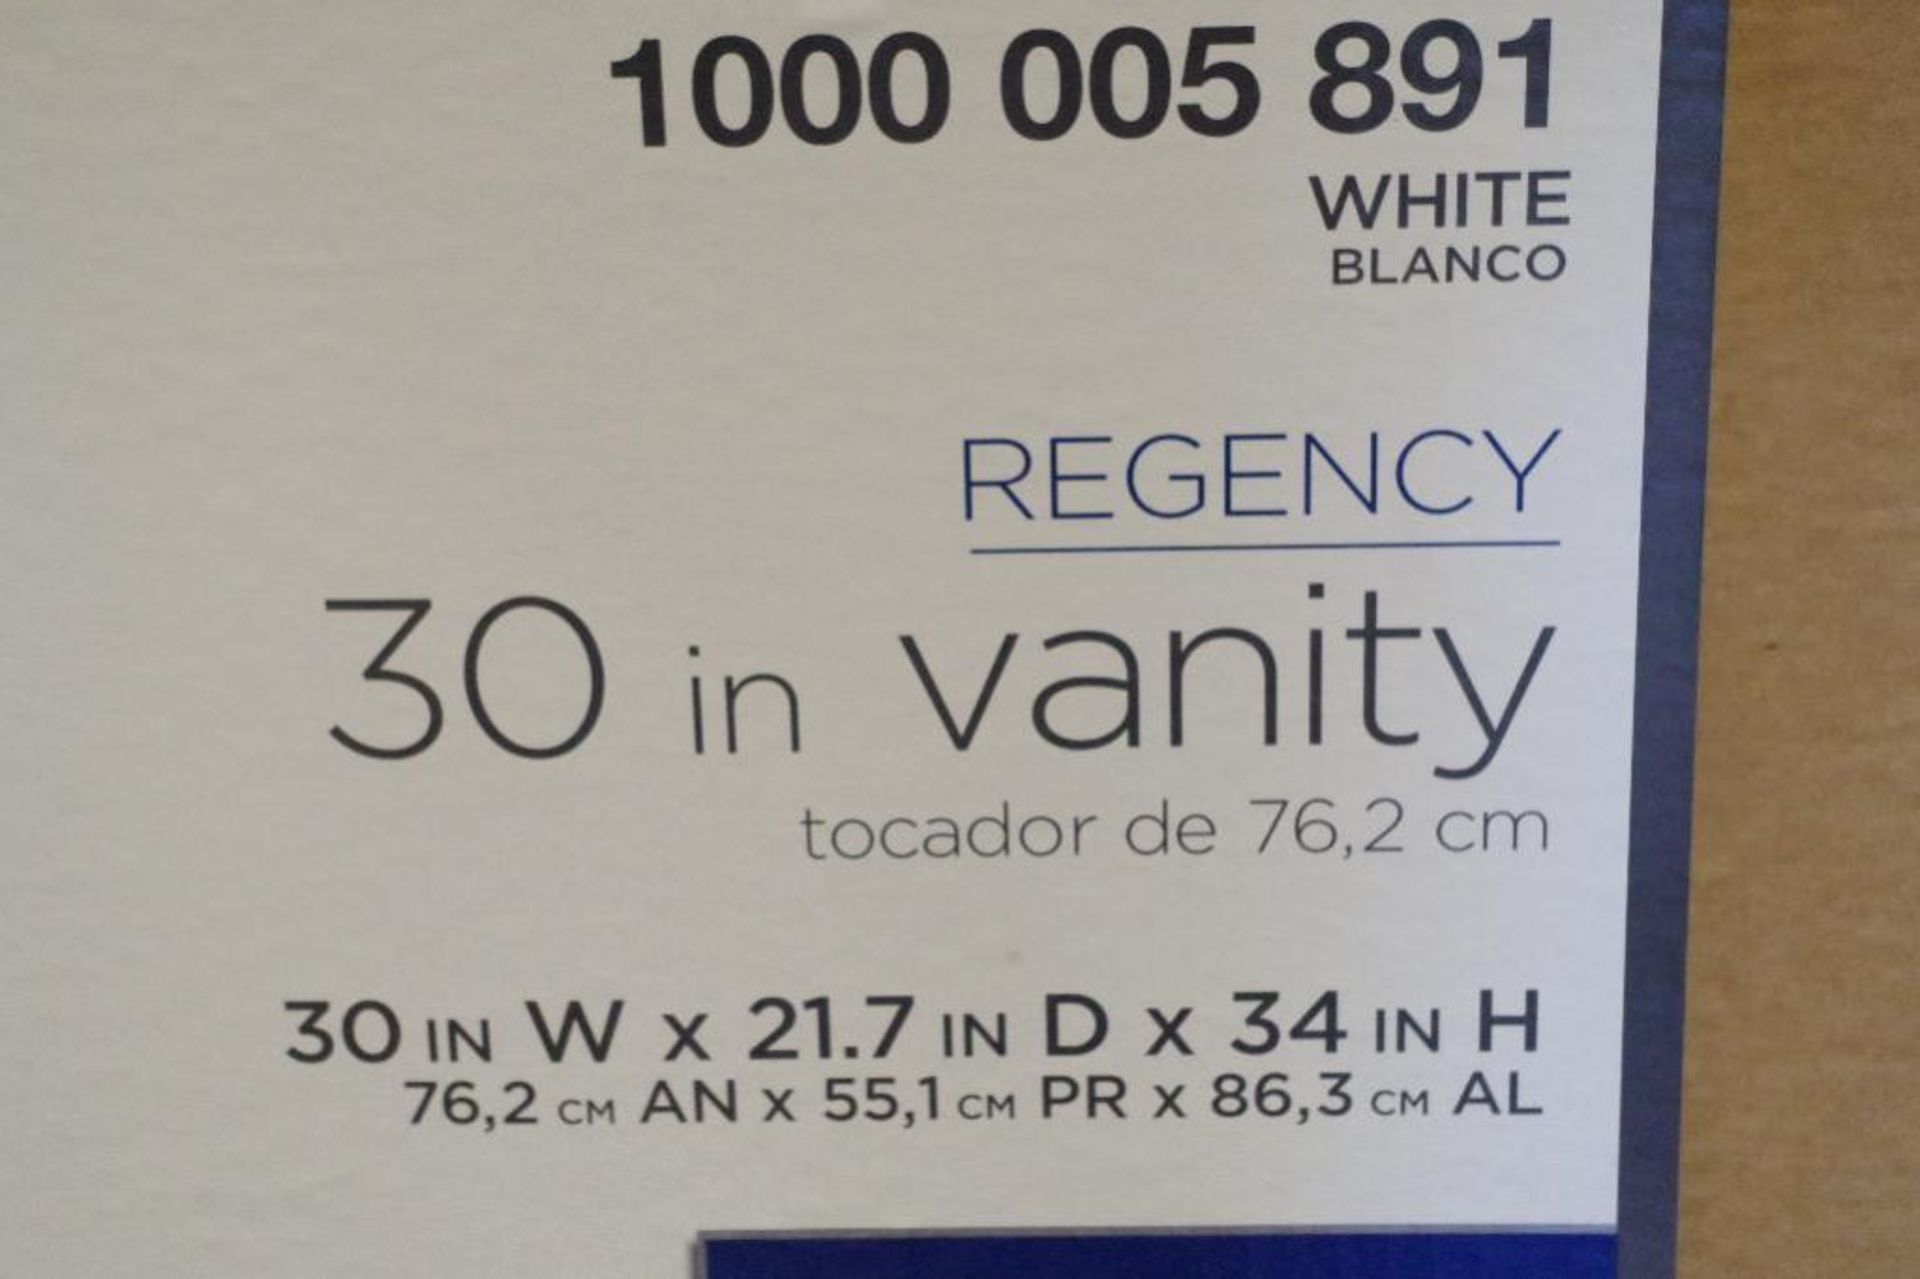 NEW GLACIER BAY Regency 30" Vanity, Color: White, Approx. 30" W x 21.7" D x 34" H - Image 8 of 13